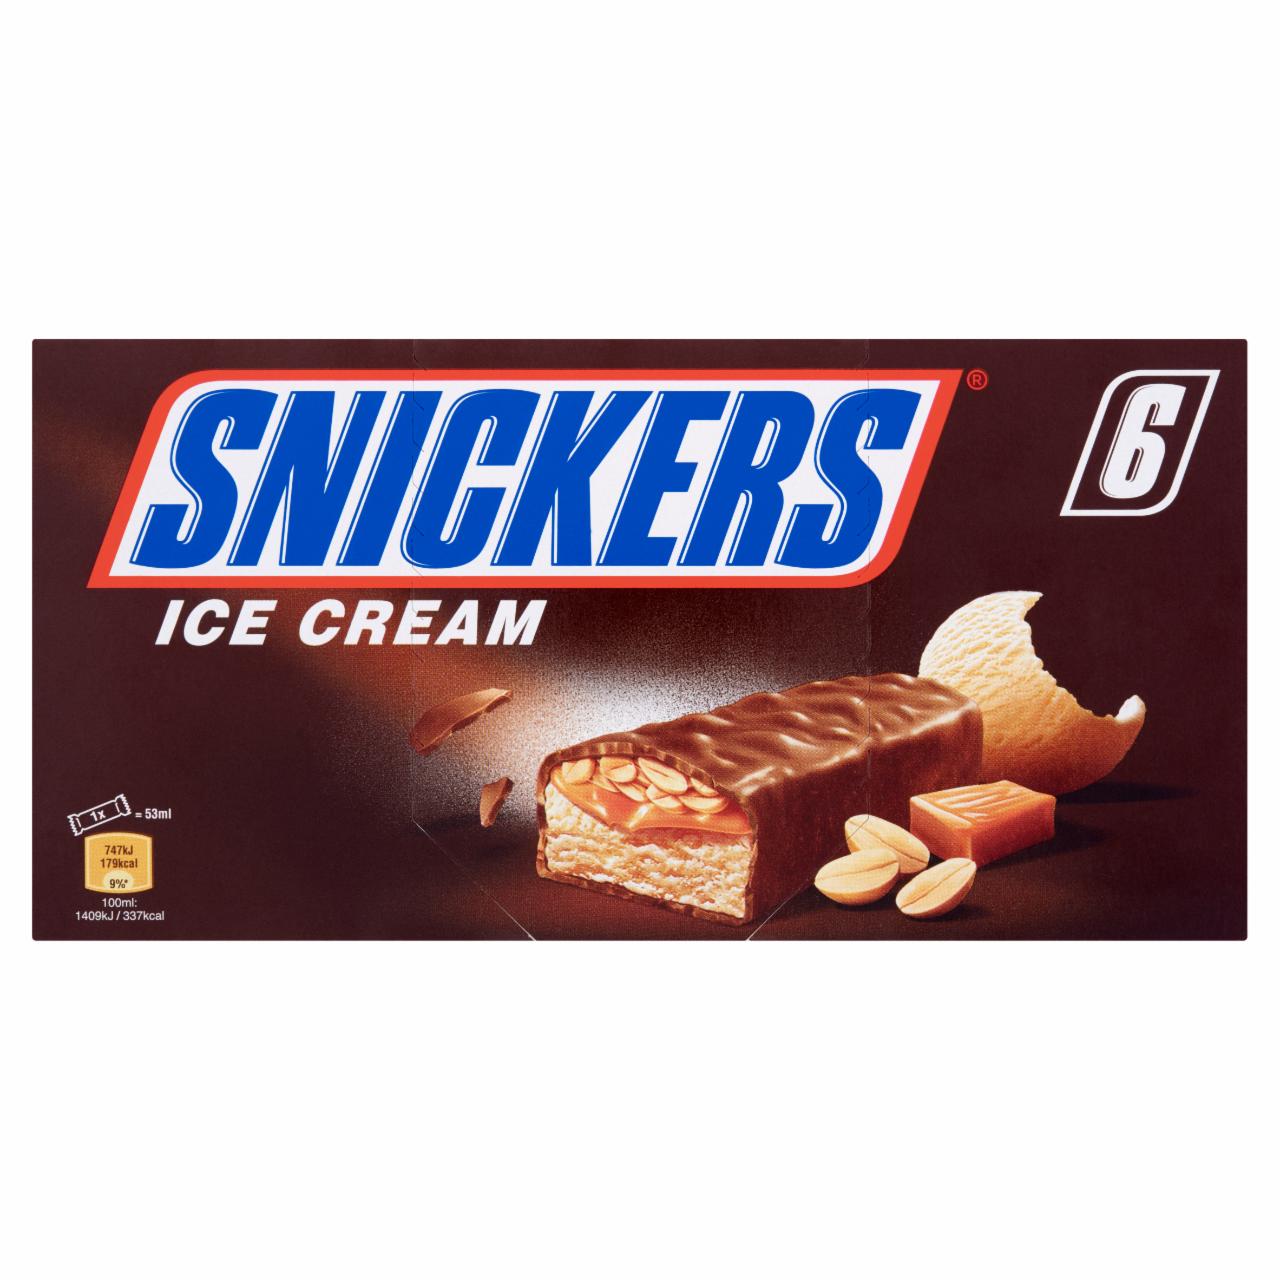 Képek - Snickers jégkrém 6-pack 288 g